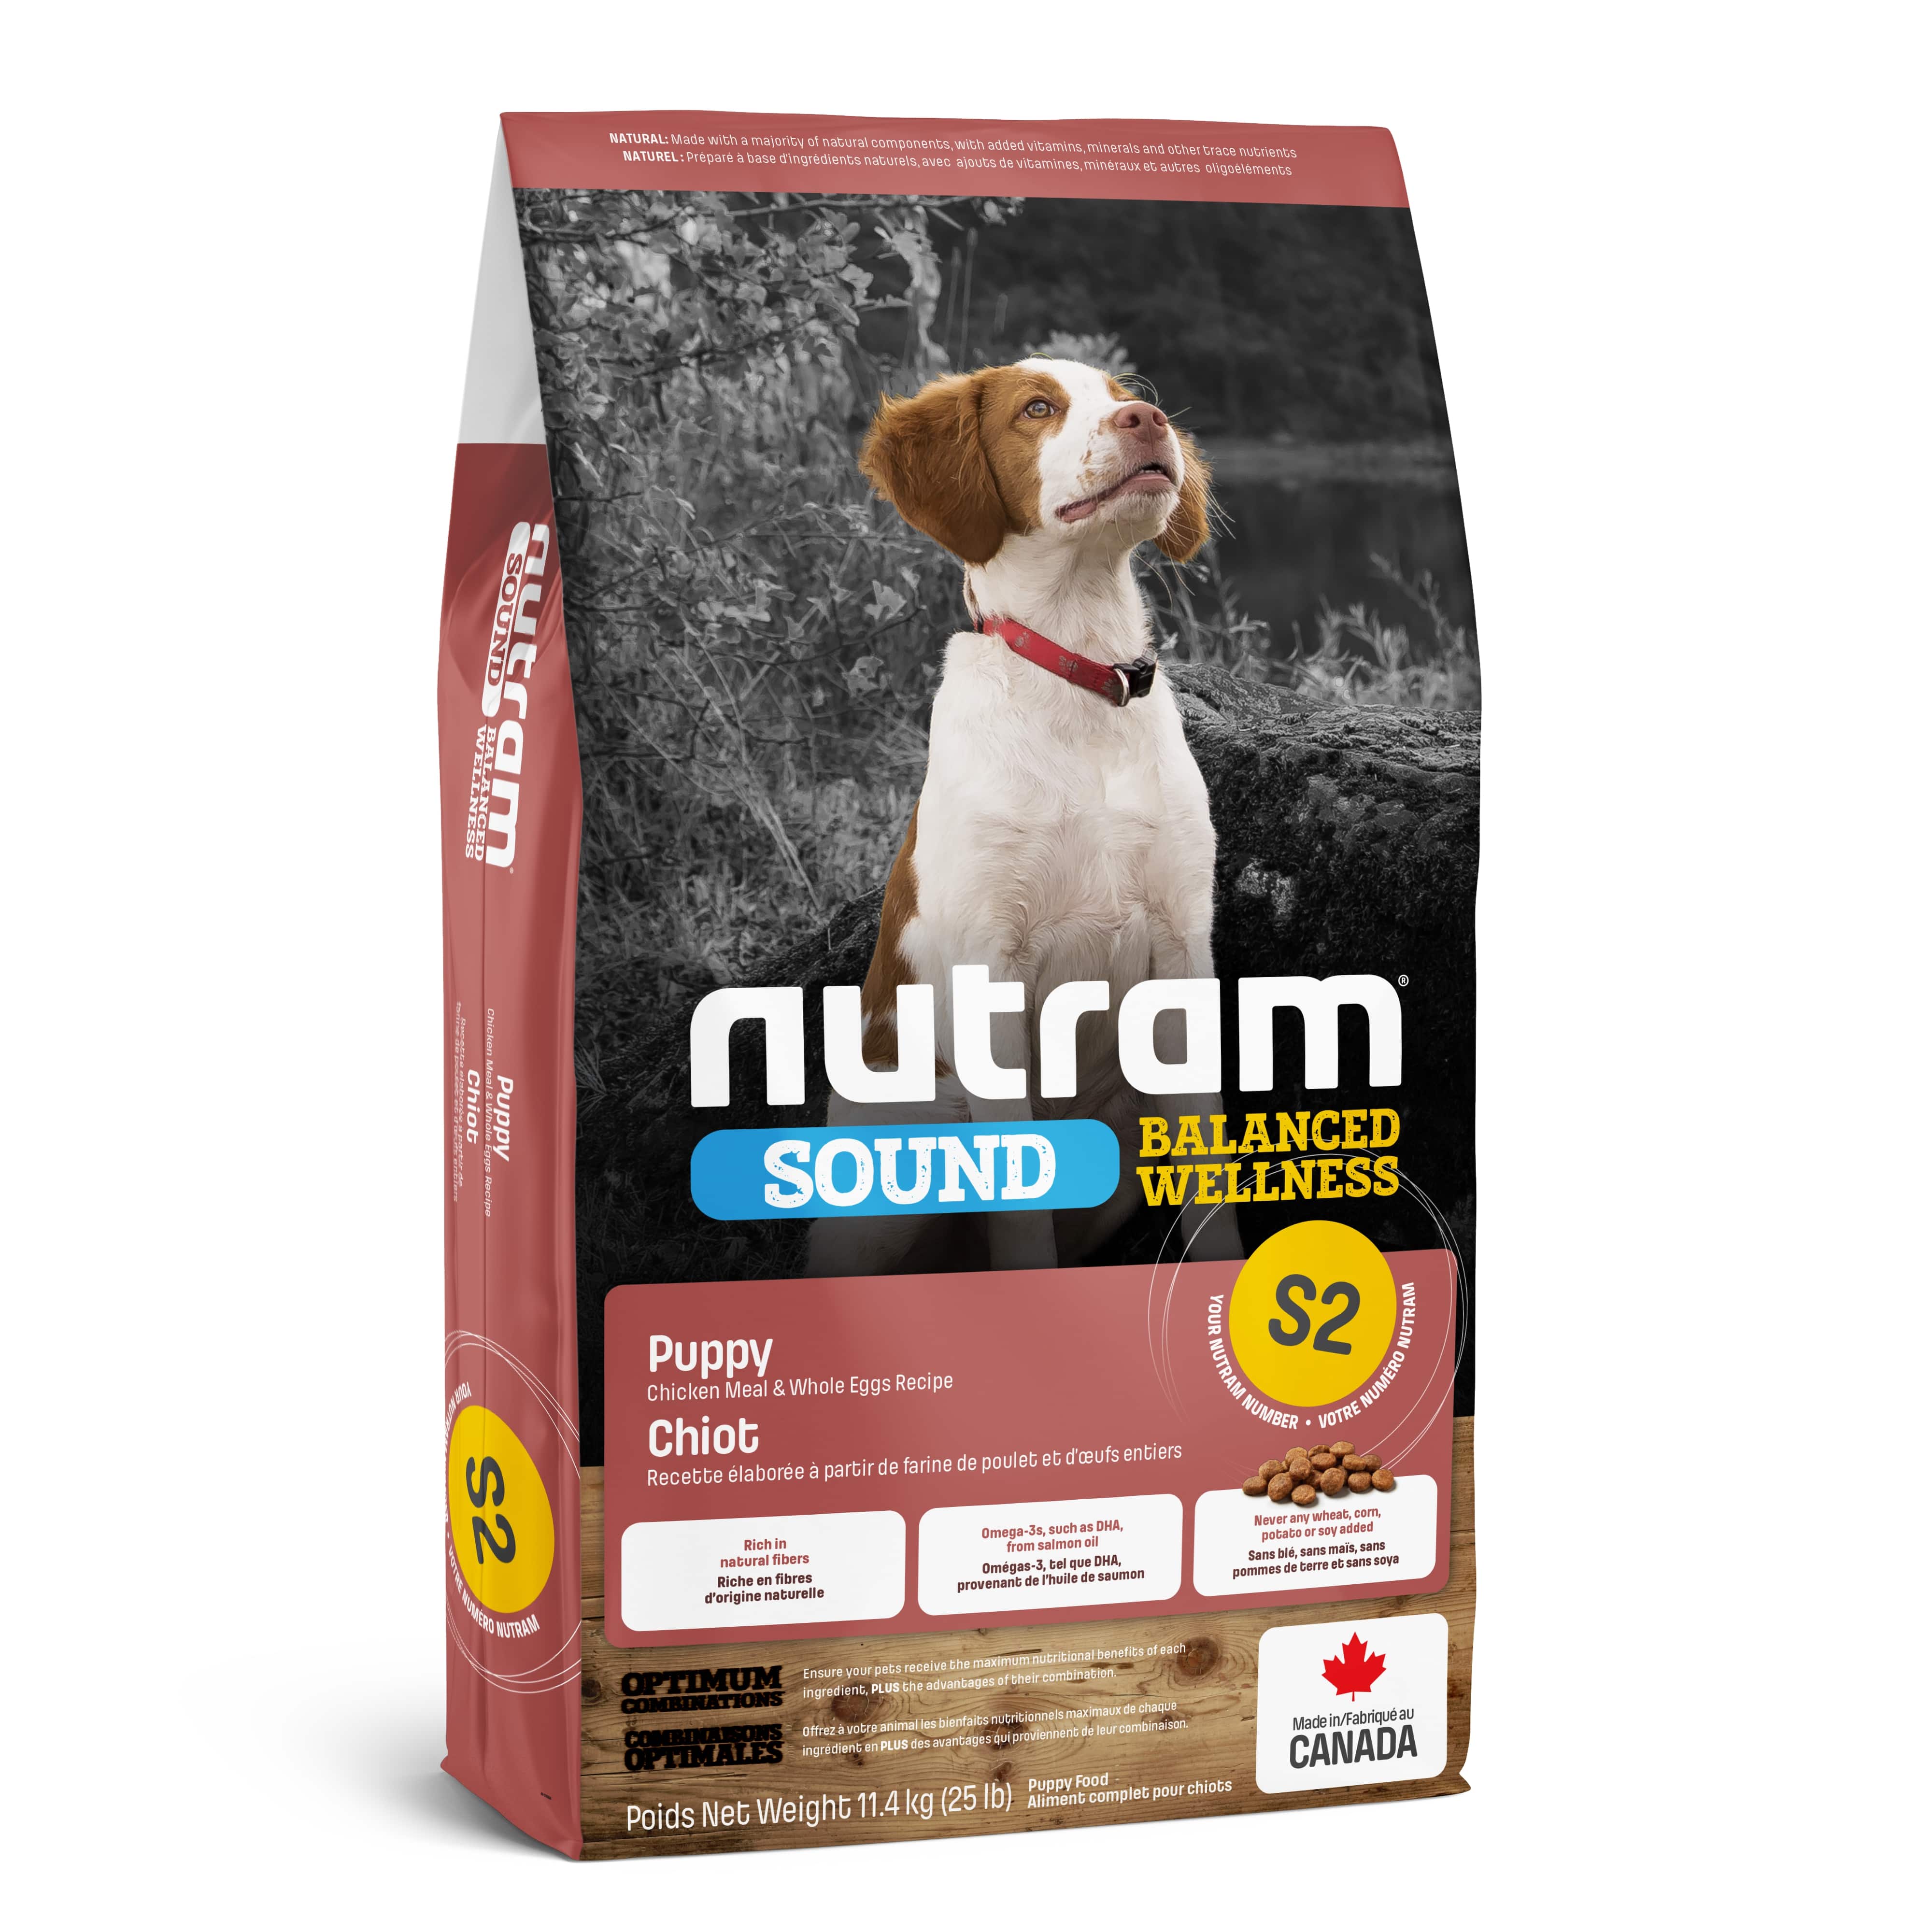 S2 Nutram Sound Balanced Wellness® Natural Puppy Food